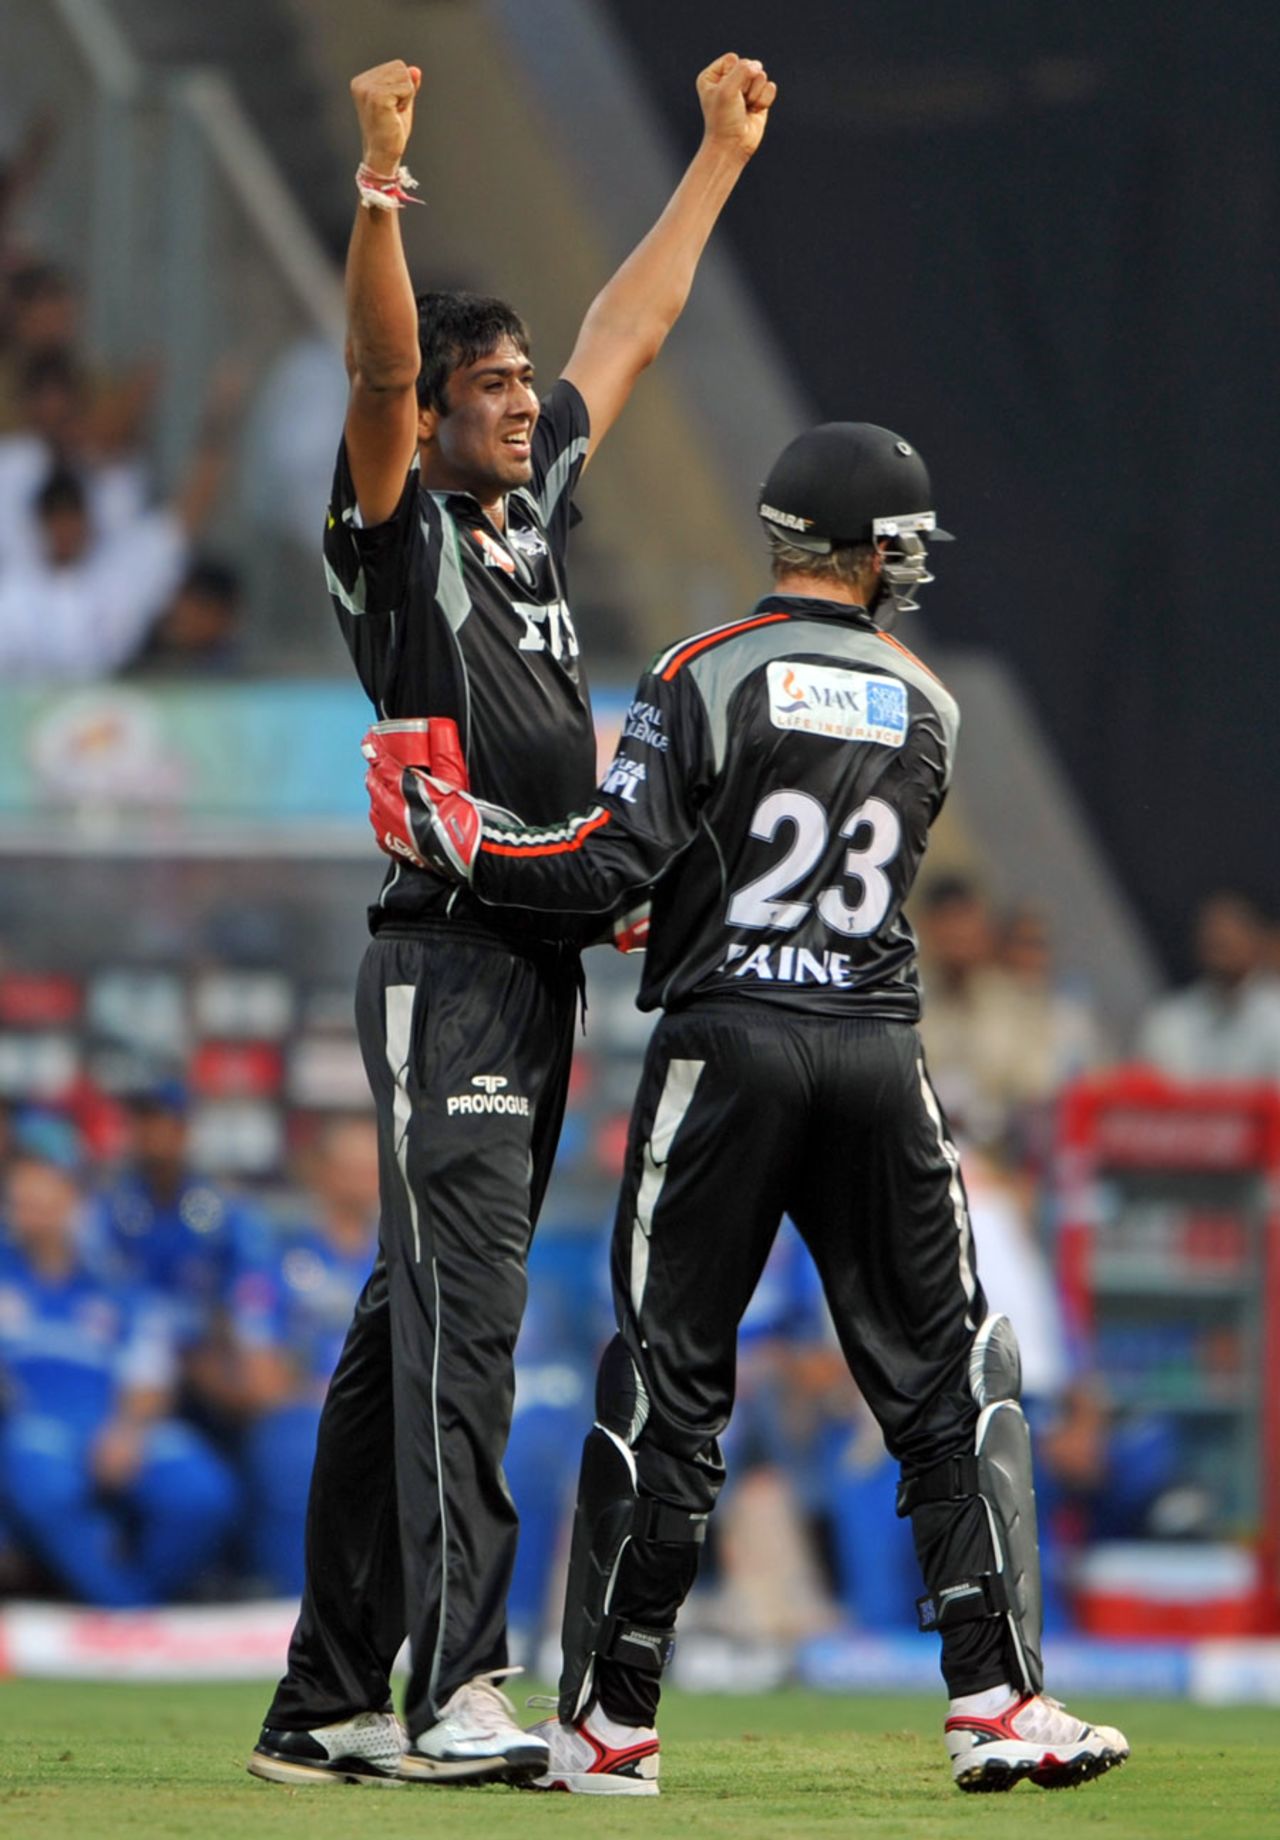 Rahul Sharma celebrates the wicket of Sachin Tendulkar, Mumbai Indians v Pune Warriors, IPL 2011, Mumbai, April 20, 2011